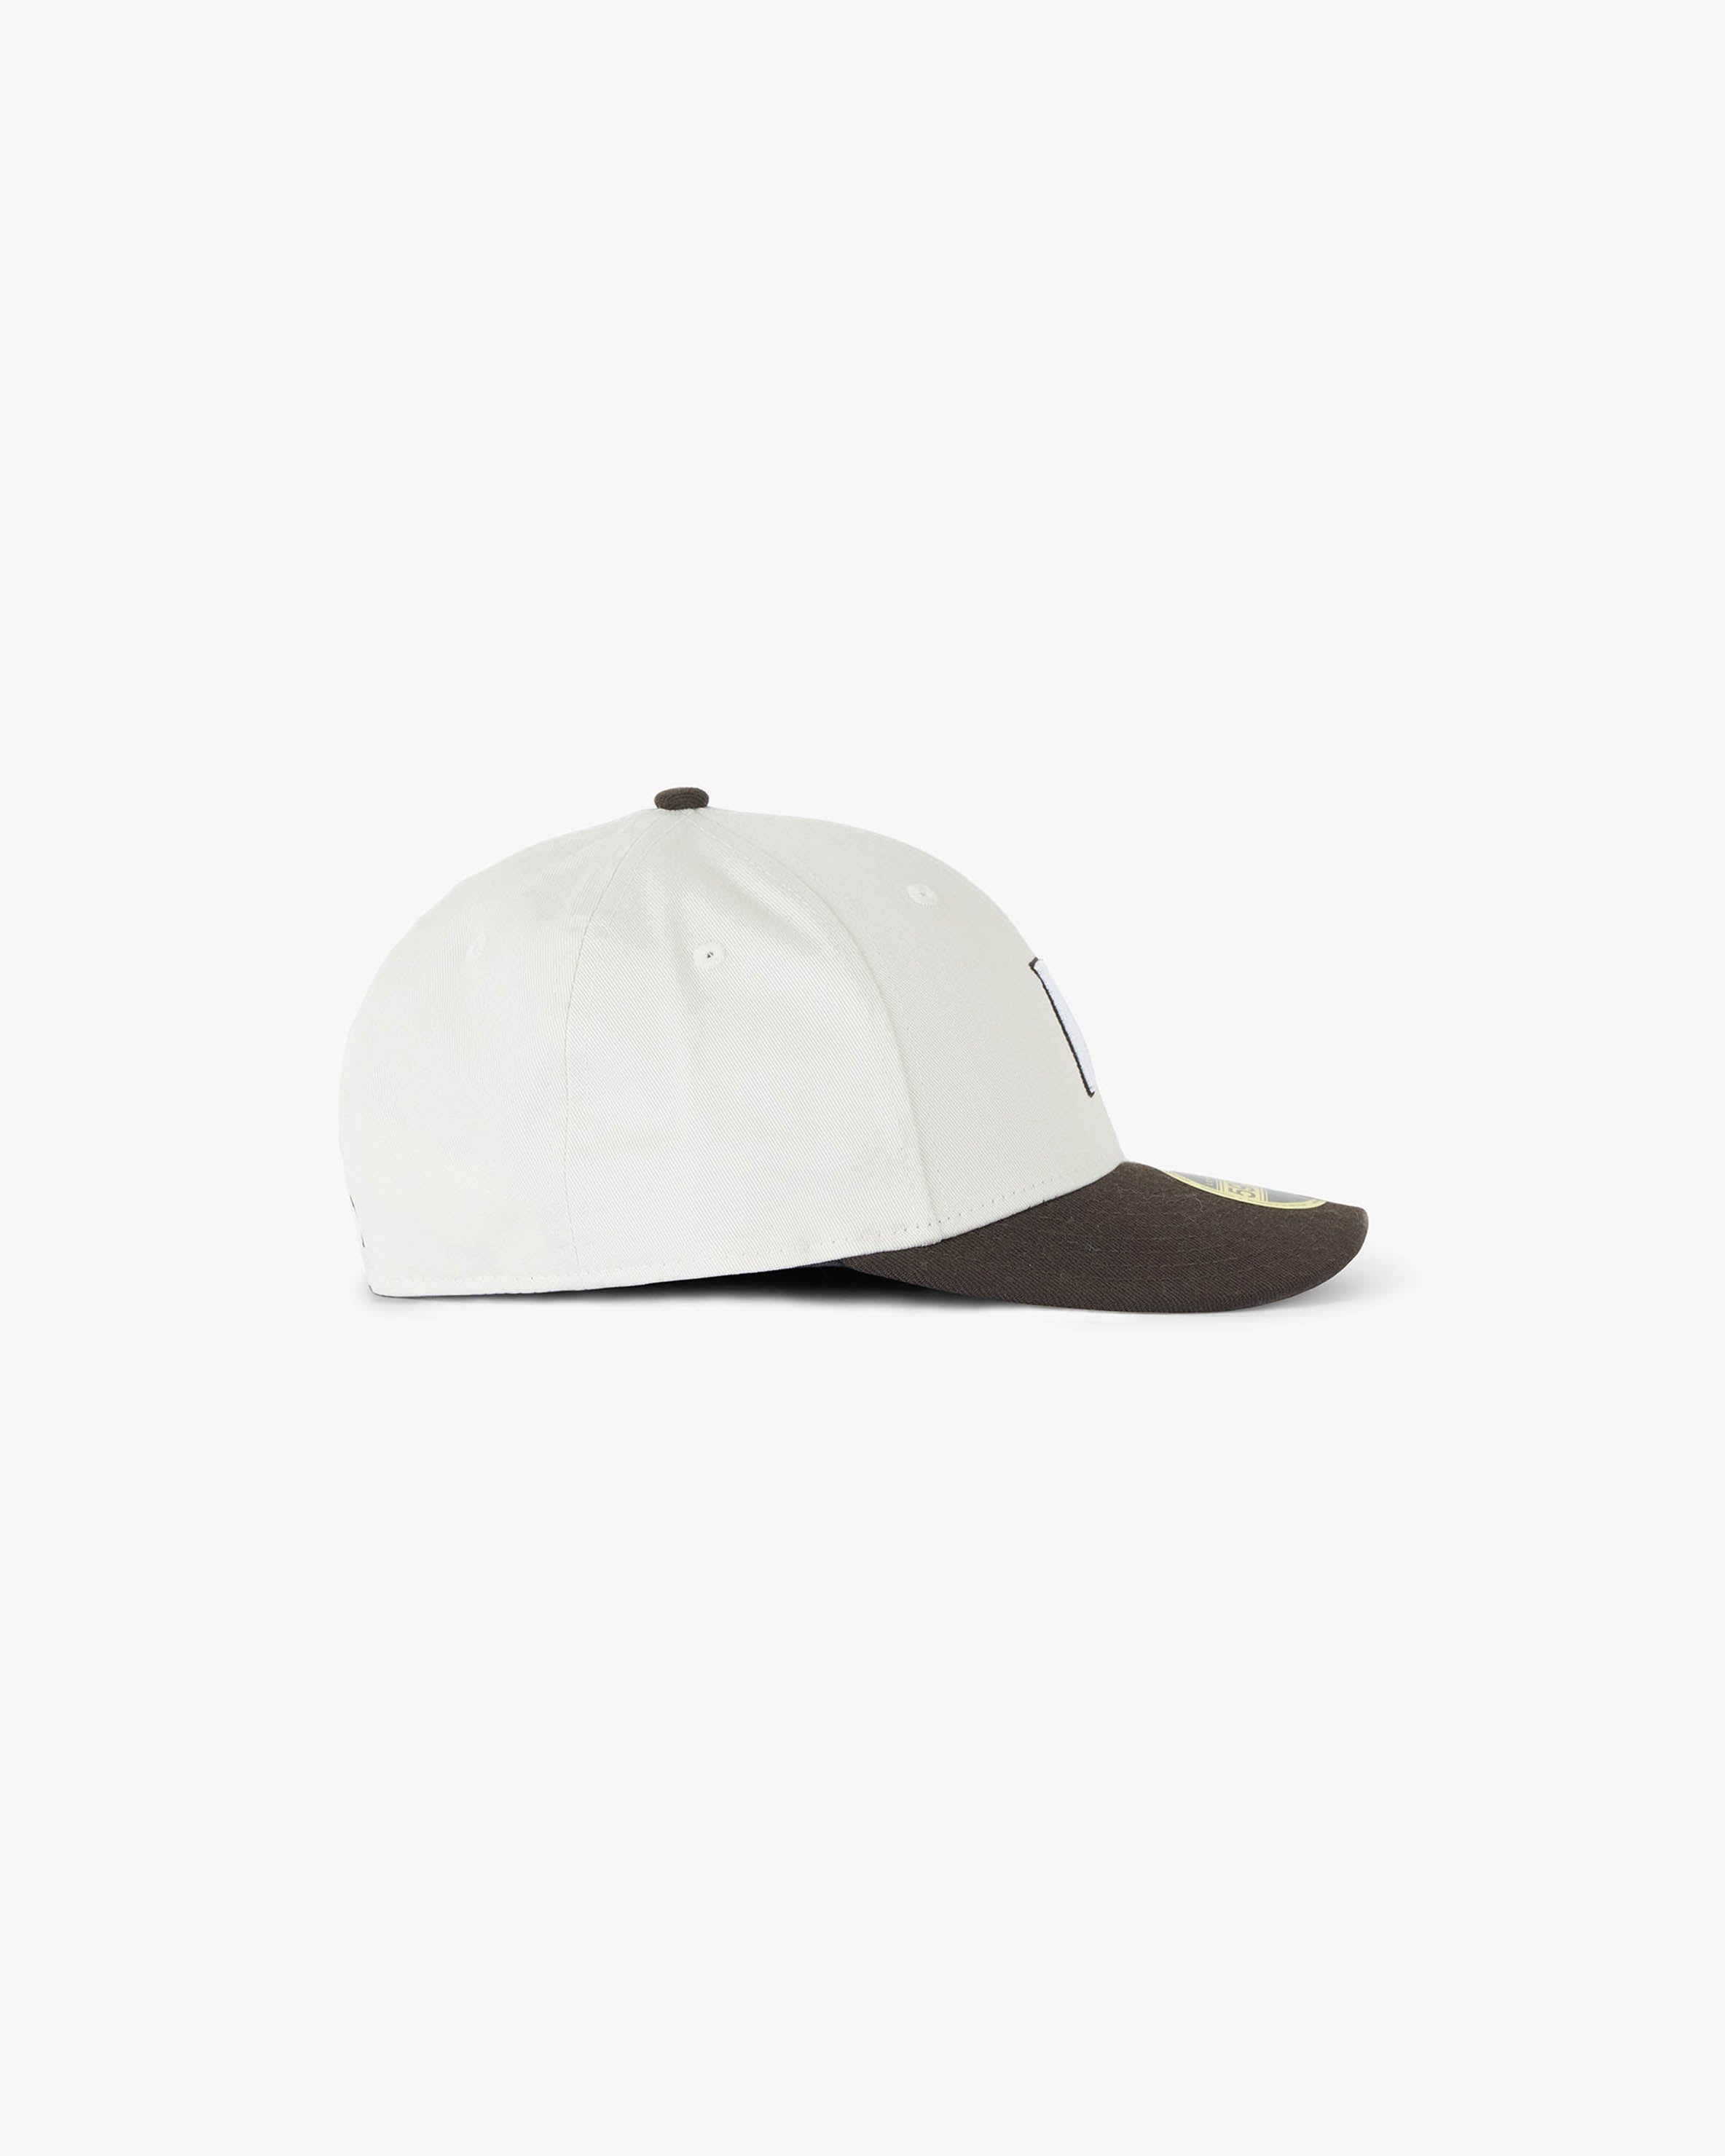 Initial New Era 59Fifty Cap - Vintage White